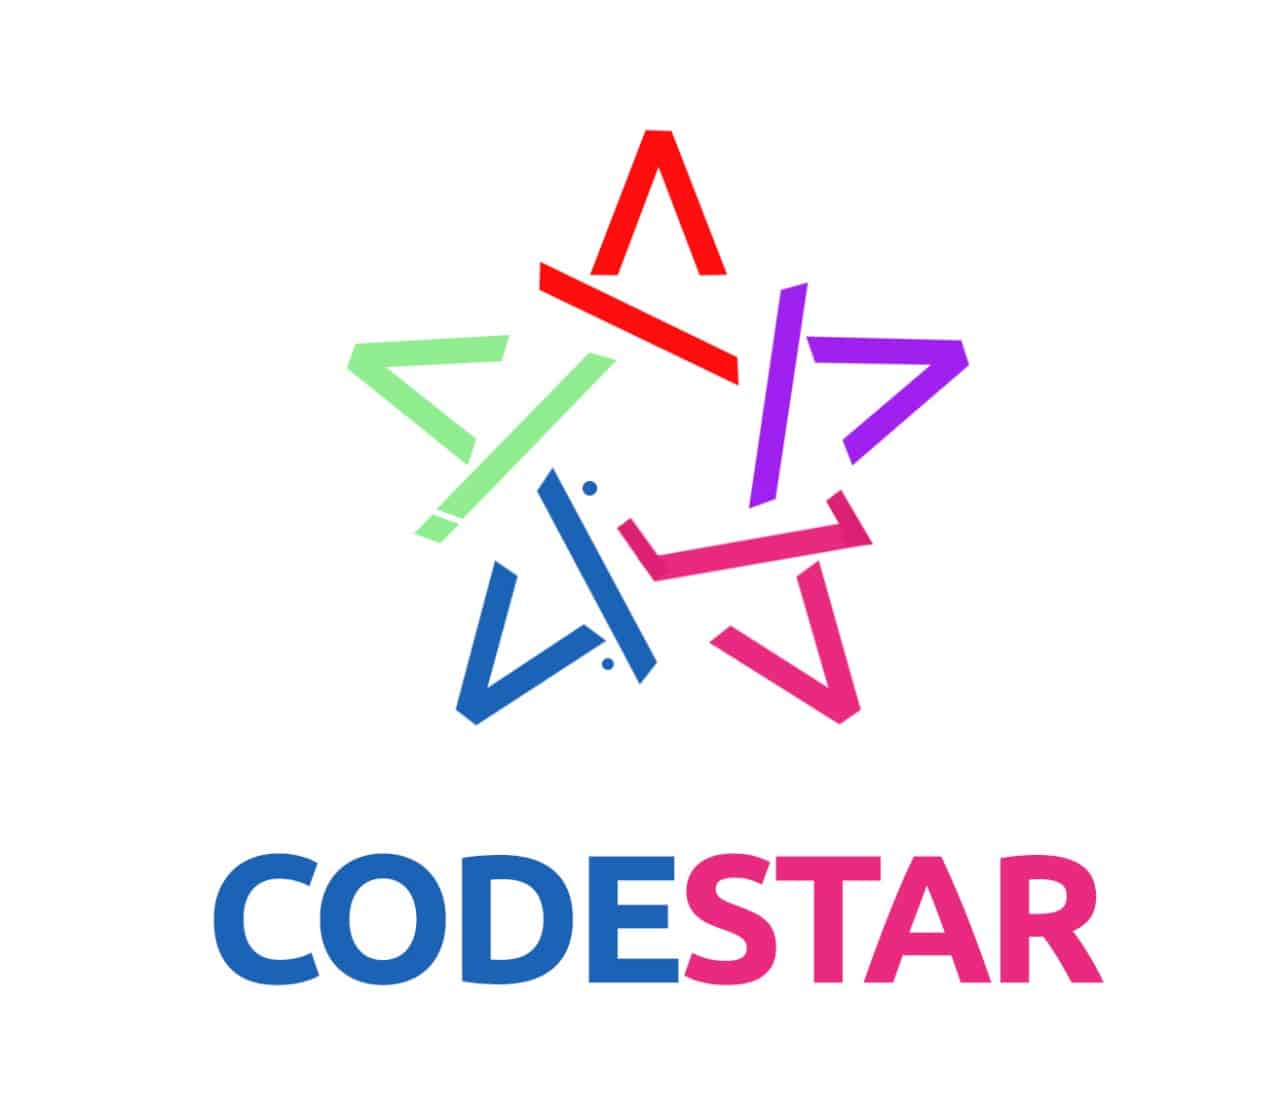 CodeStar